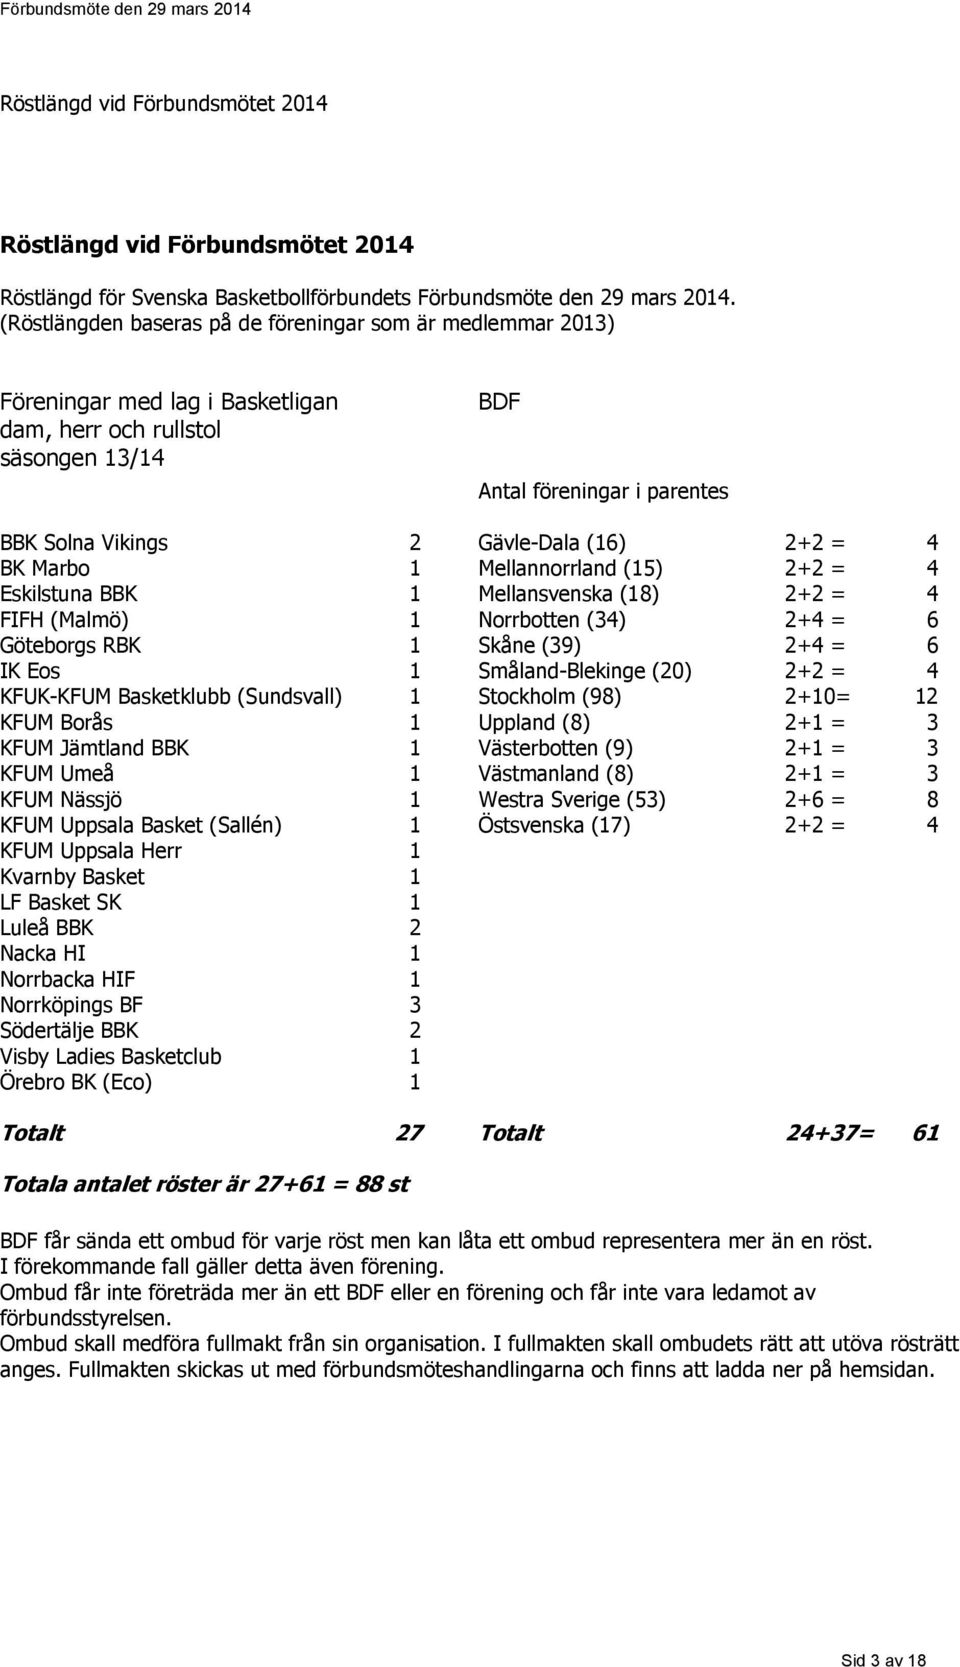 2+2 = 4 BK Marbo 1 Mellannorrland (15) 2+2 = 4 Eskilstuna BBK 1 Mellansvenska (18) 2+2 = 4 FIFH (Malmö) 1 Norrbotten (34) 2+4 = 6 Göteborgs RBK 1 Skåne (39) 2+4 = 6 IK Eos 1 Småland-Blekinge (20) 2+2